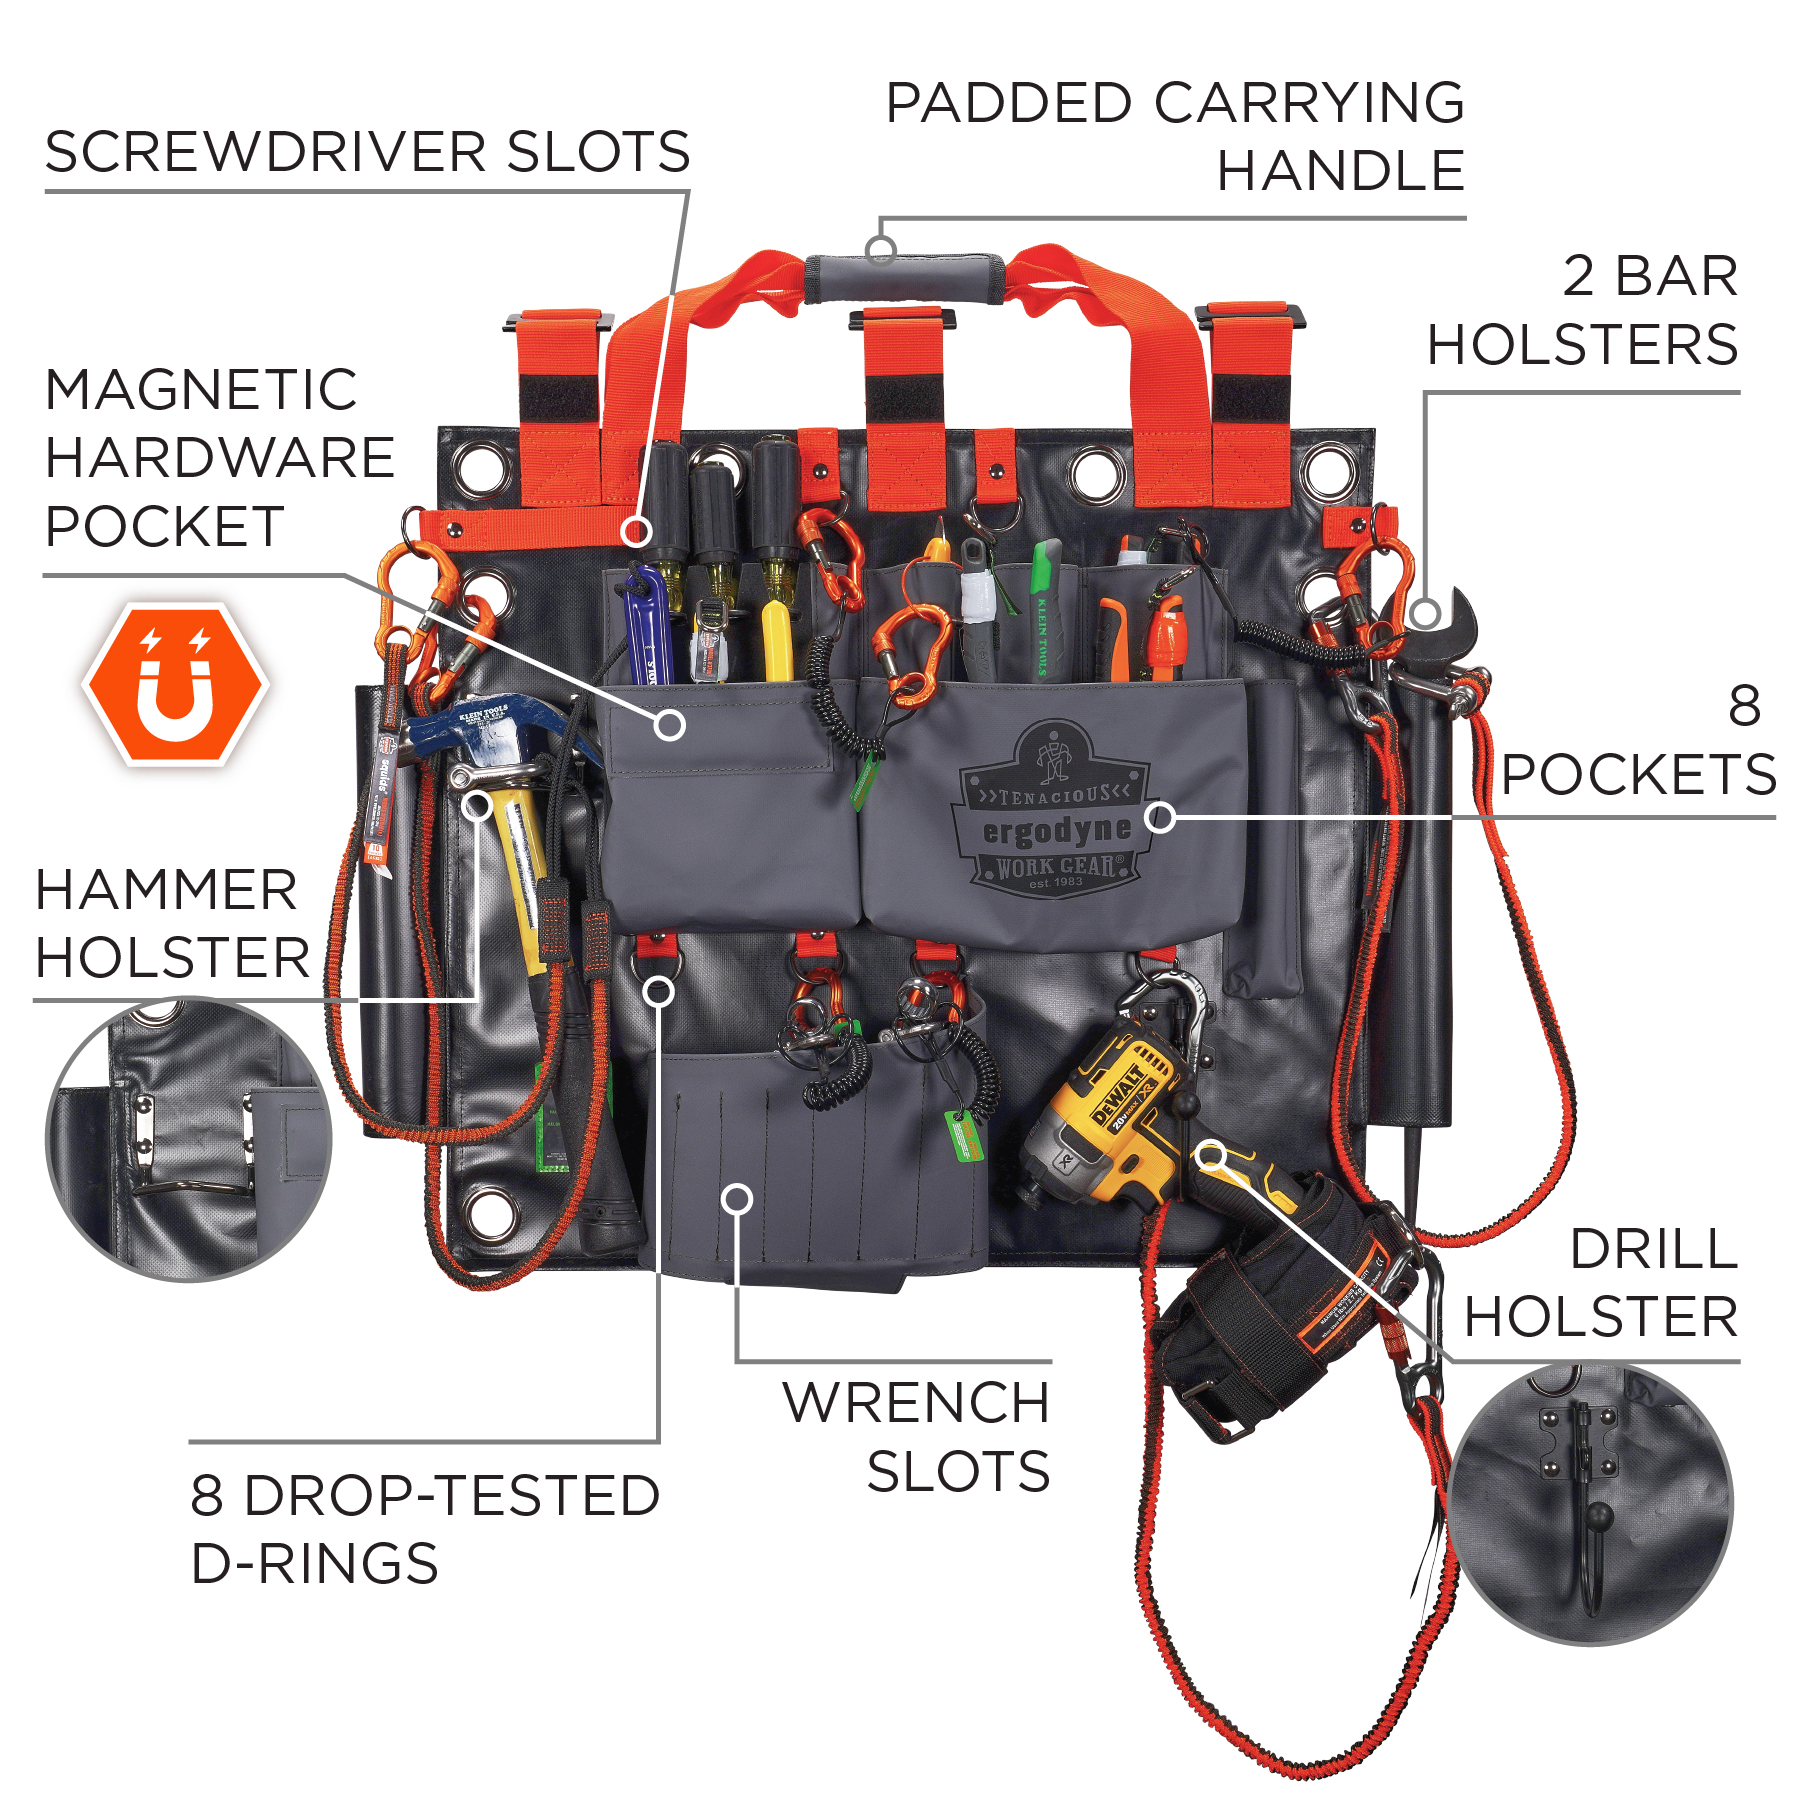 Strap Hook Catalog: Ez-Adjustable Handbag and Purse Strap Hooks